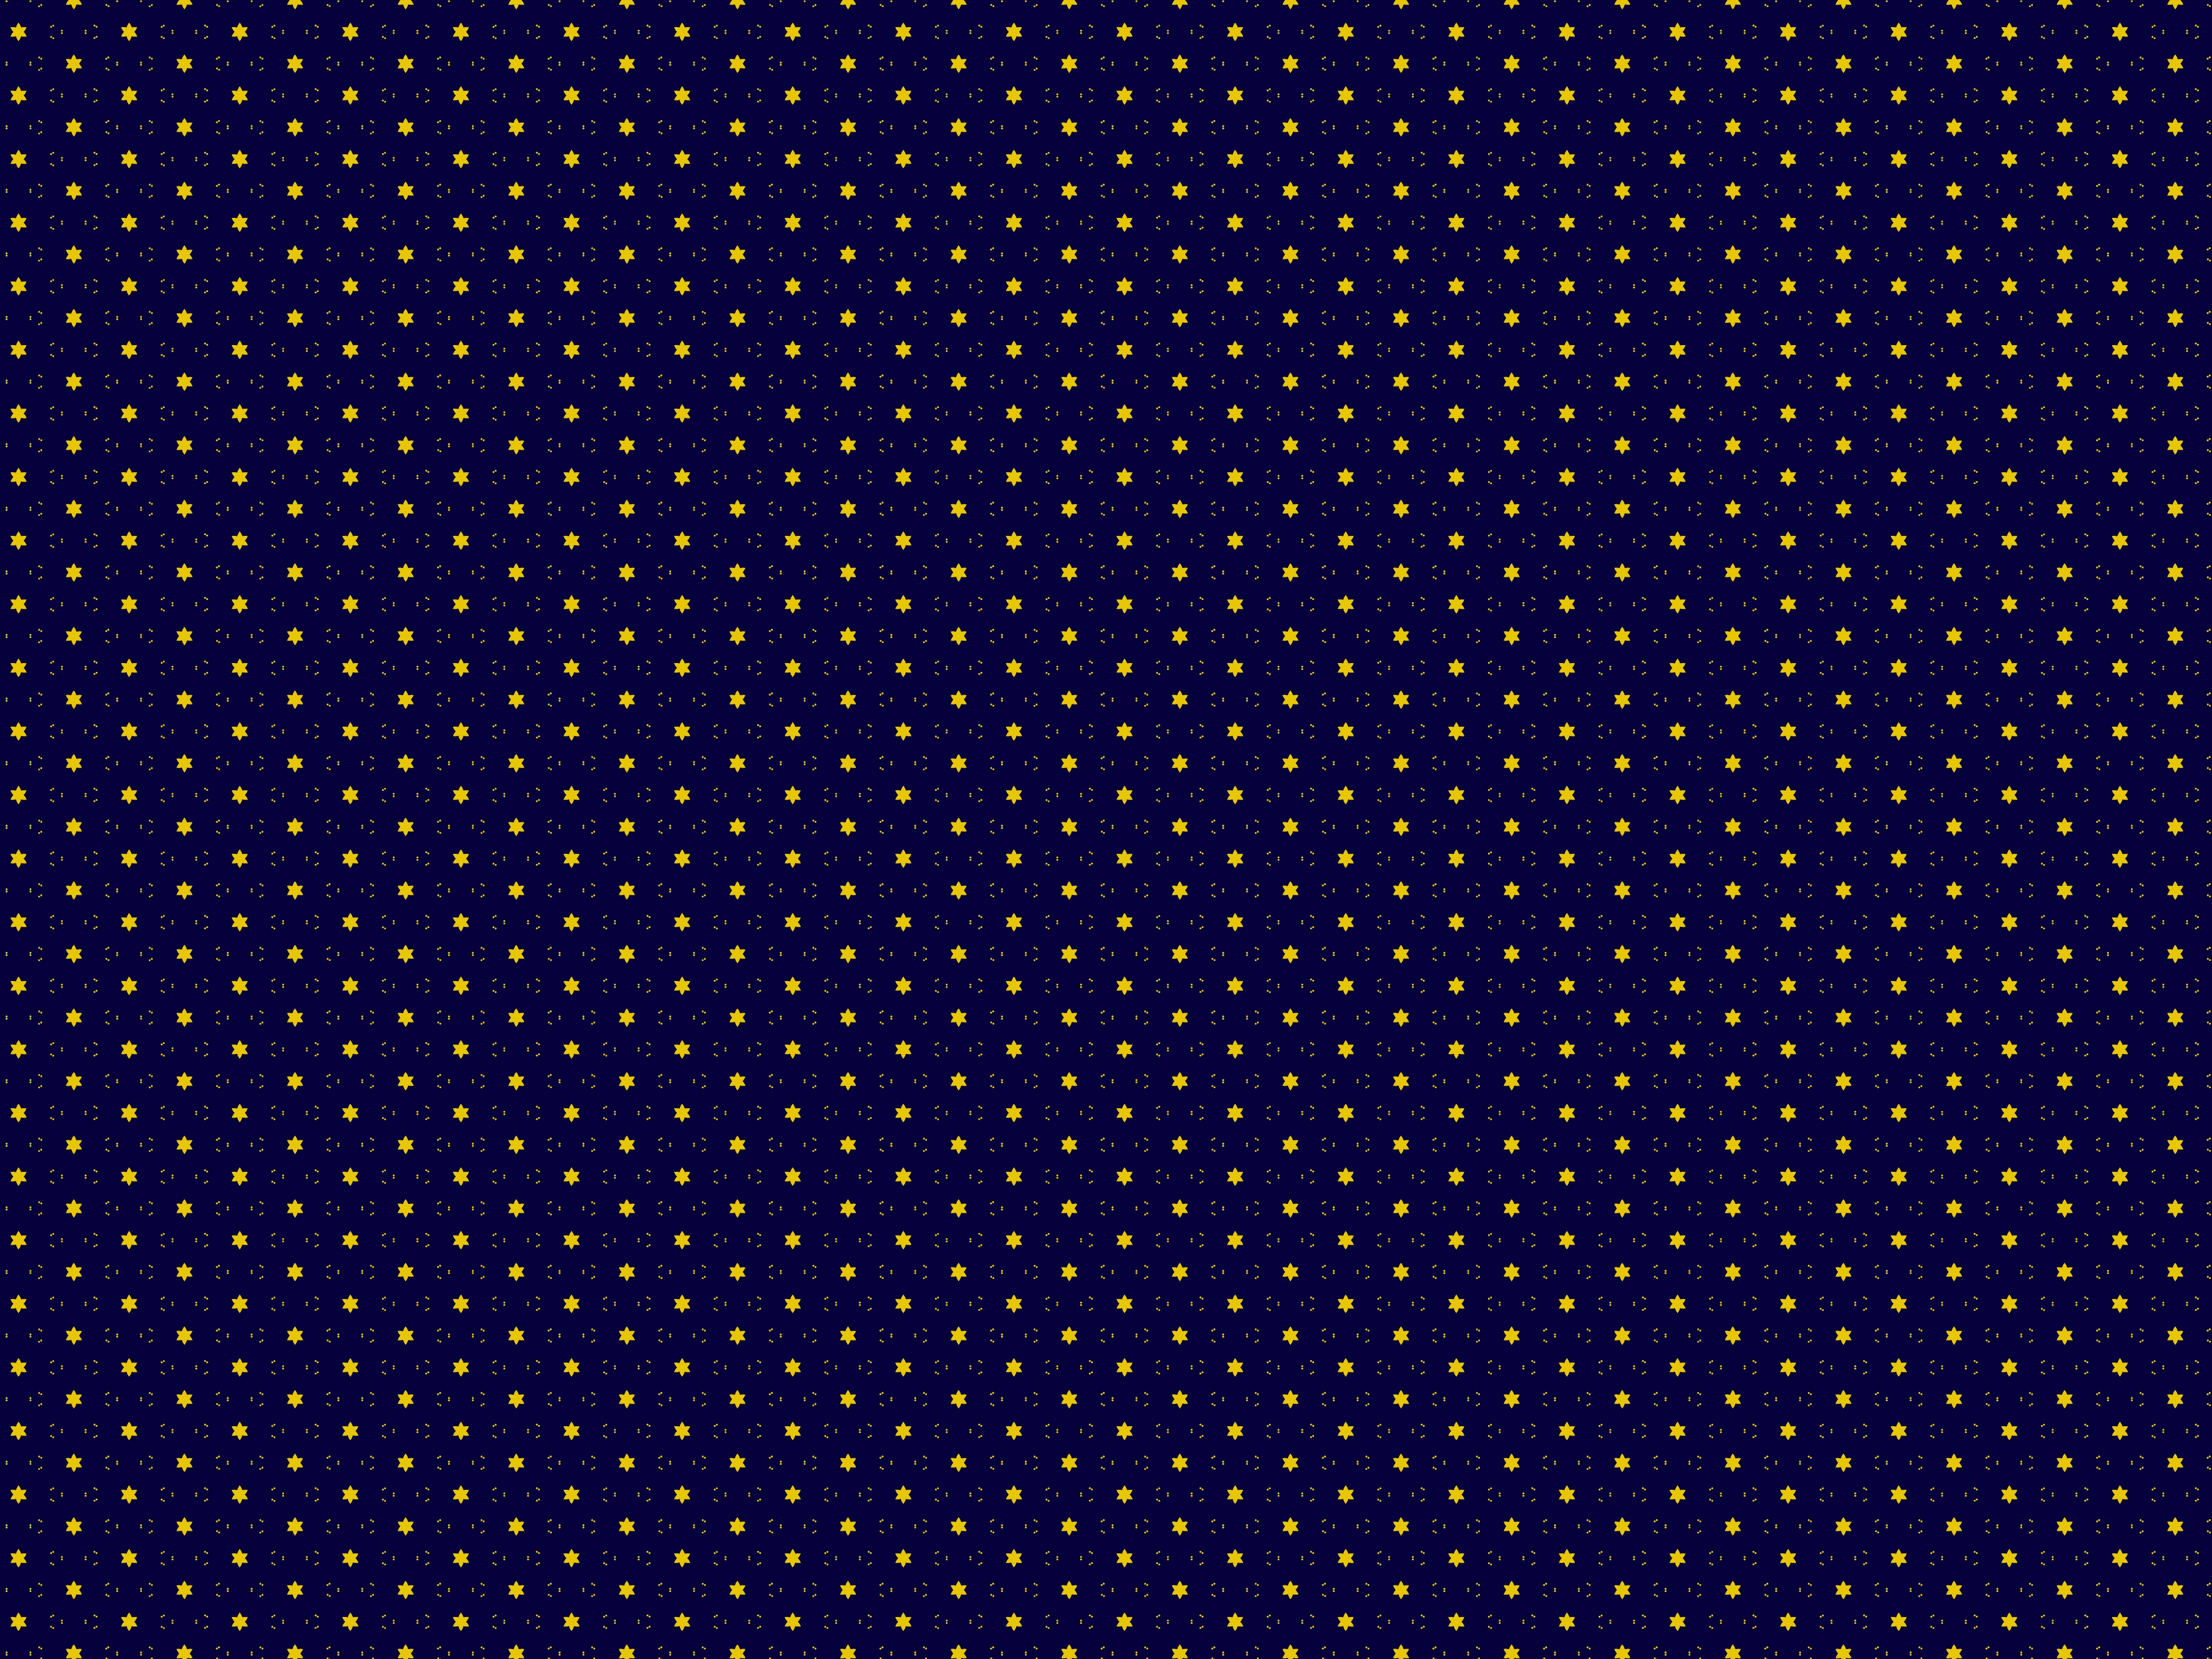 Horizontal Wallpaper patterns, stars, texture, textures, surface, asterisks